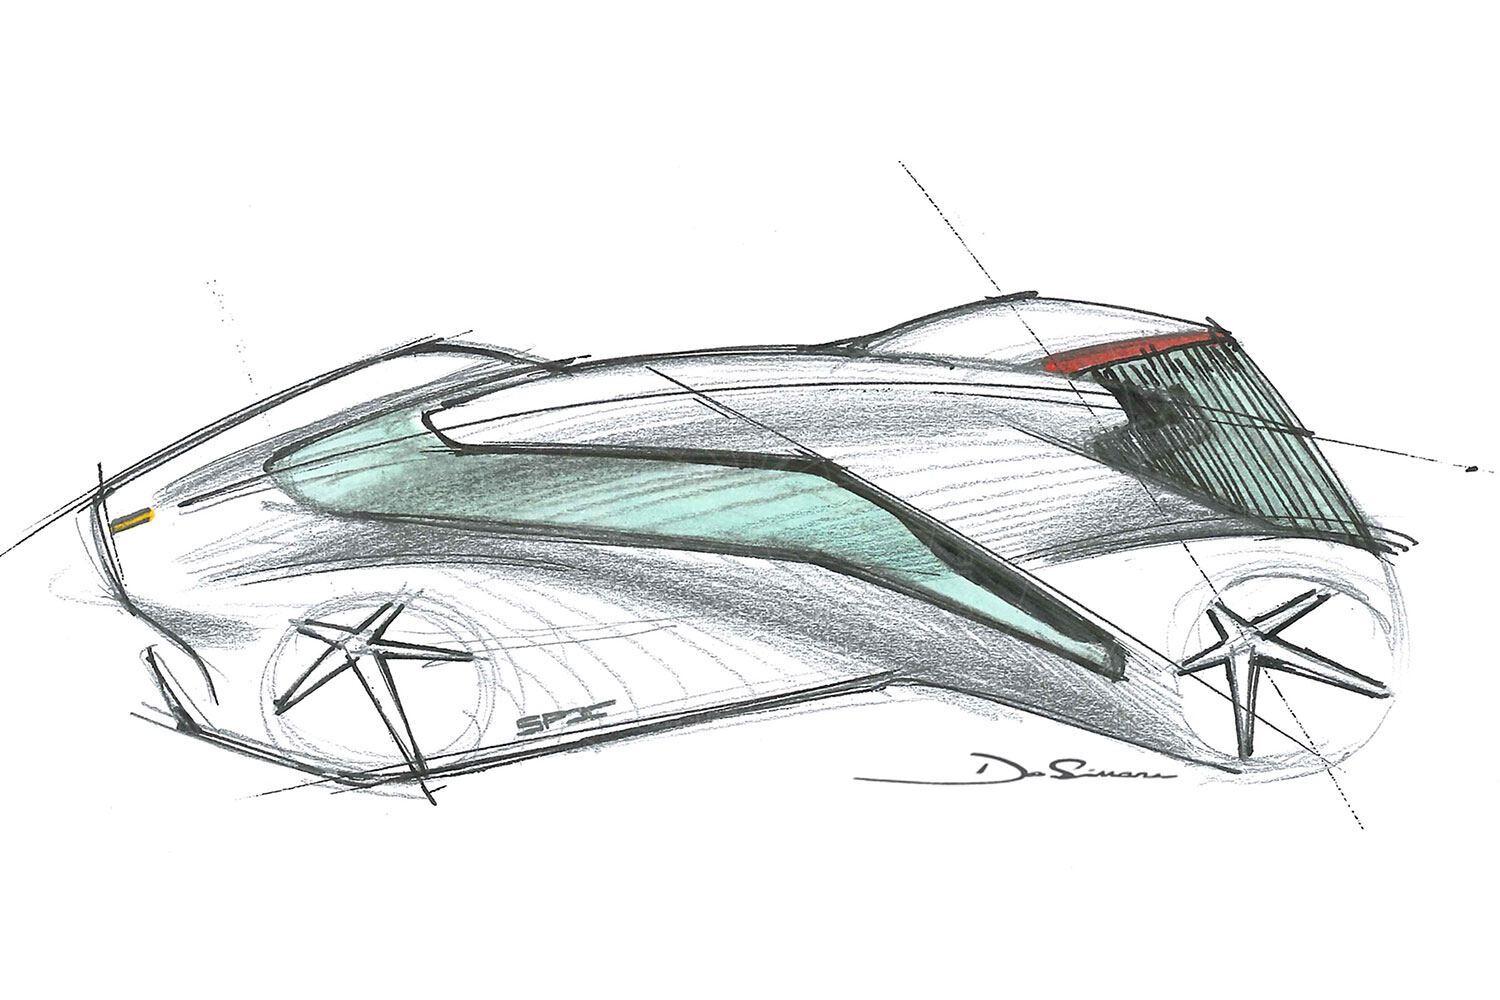 Ferrari P80/C design sketch Pic: Ferrari | Ferrari P80/C design sketch